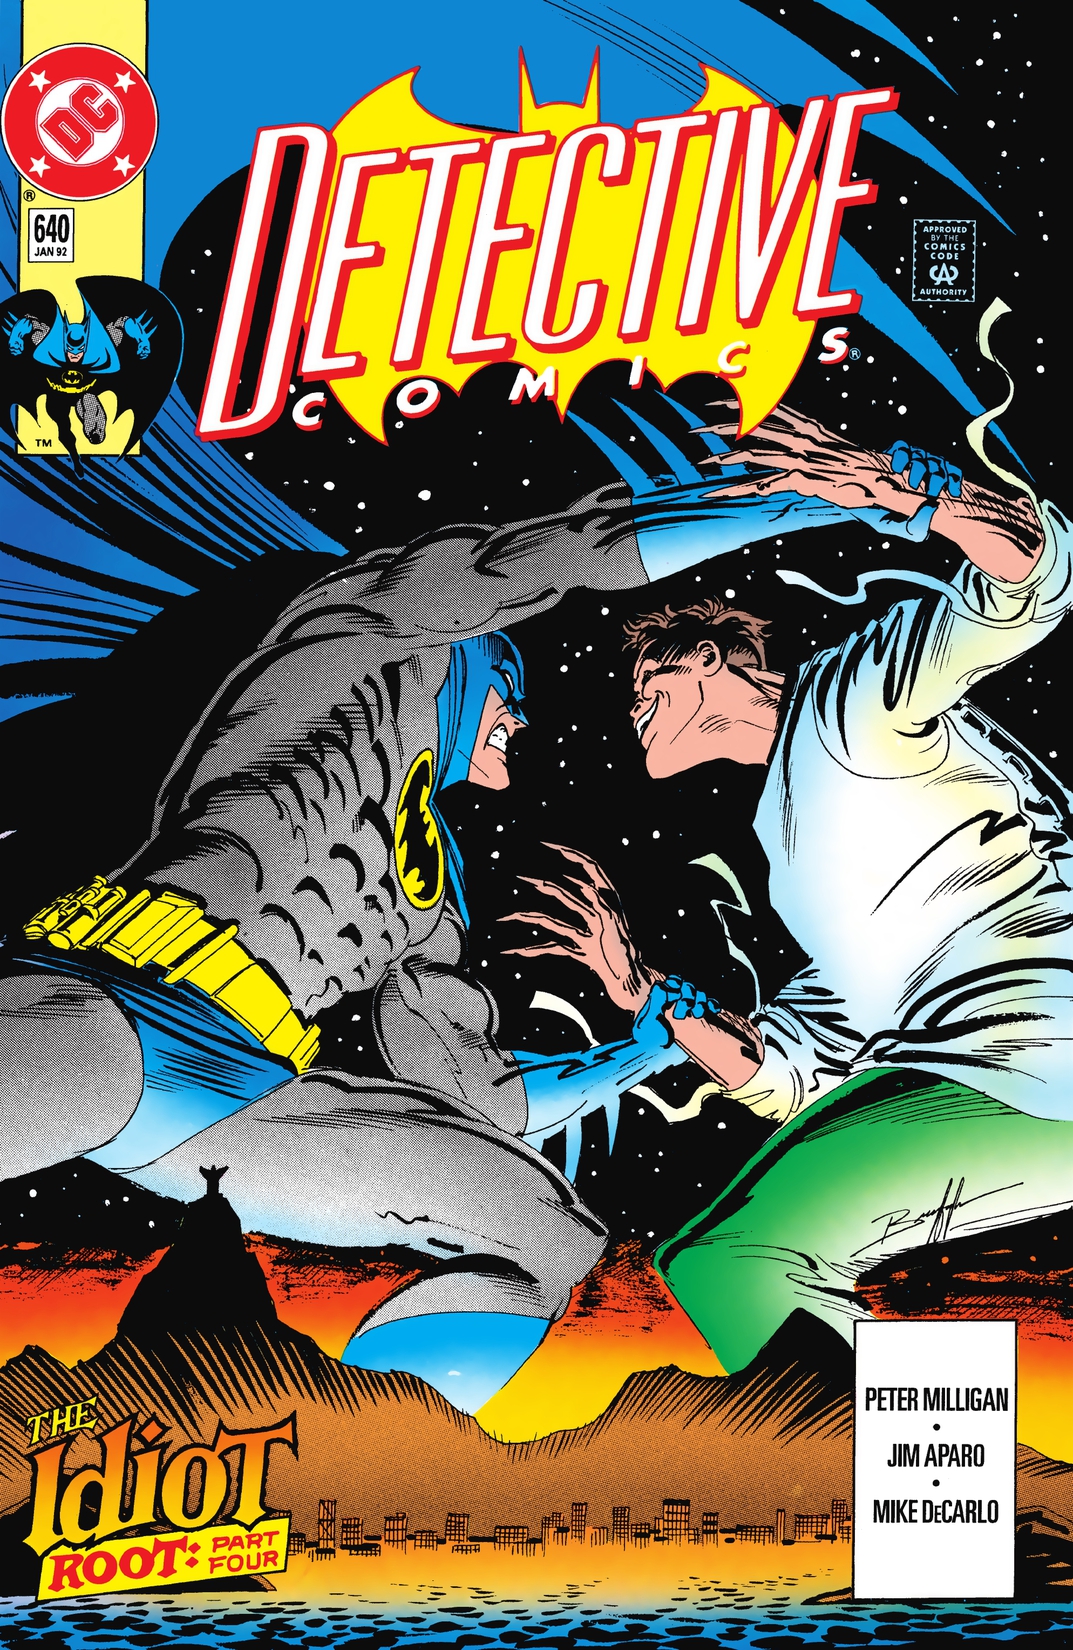 Detective Comics (1937-2011) #640 preview images